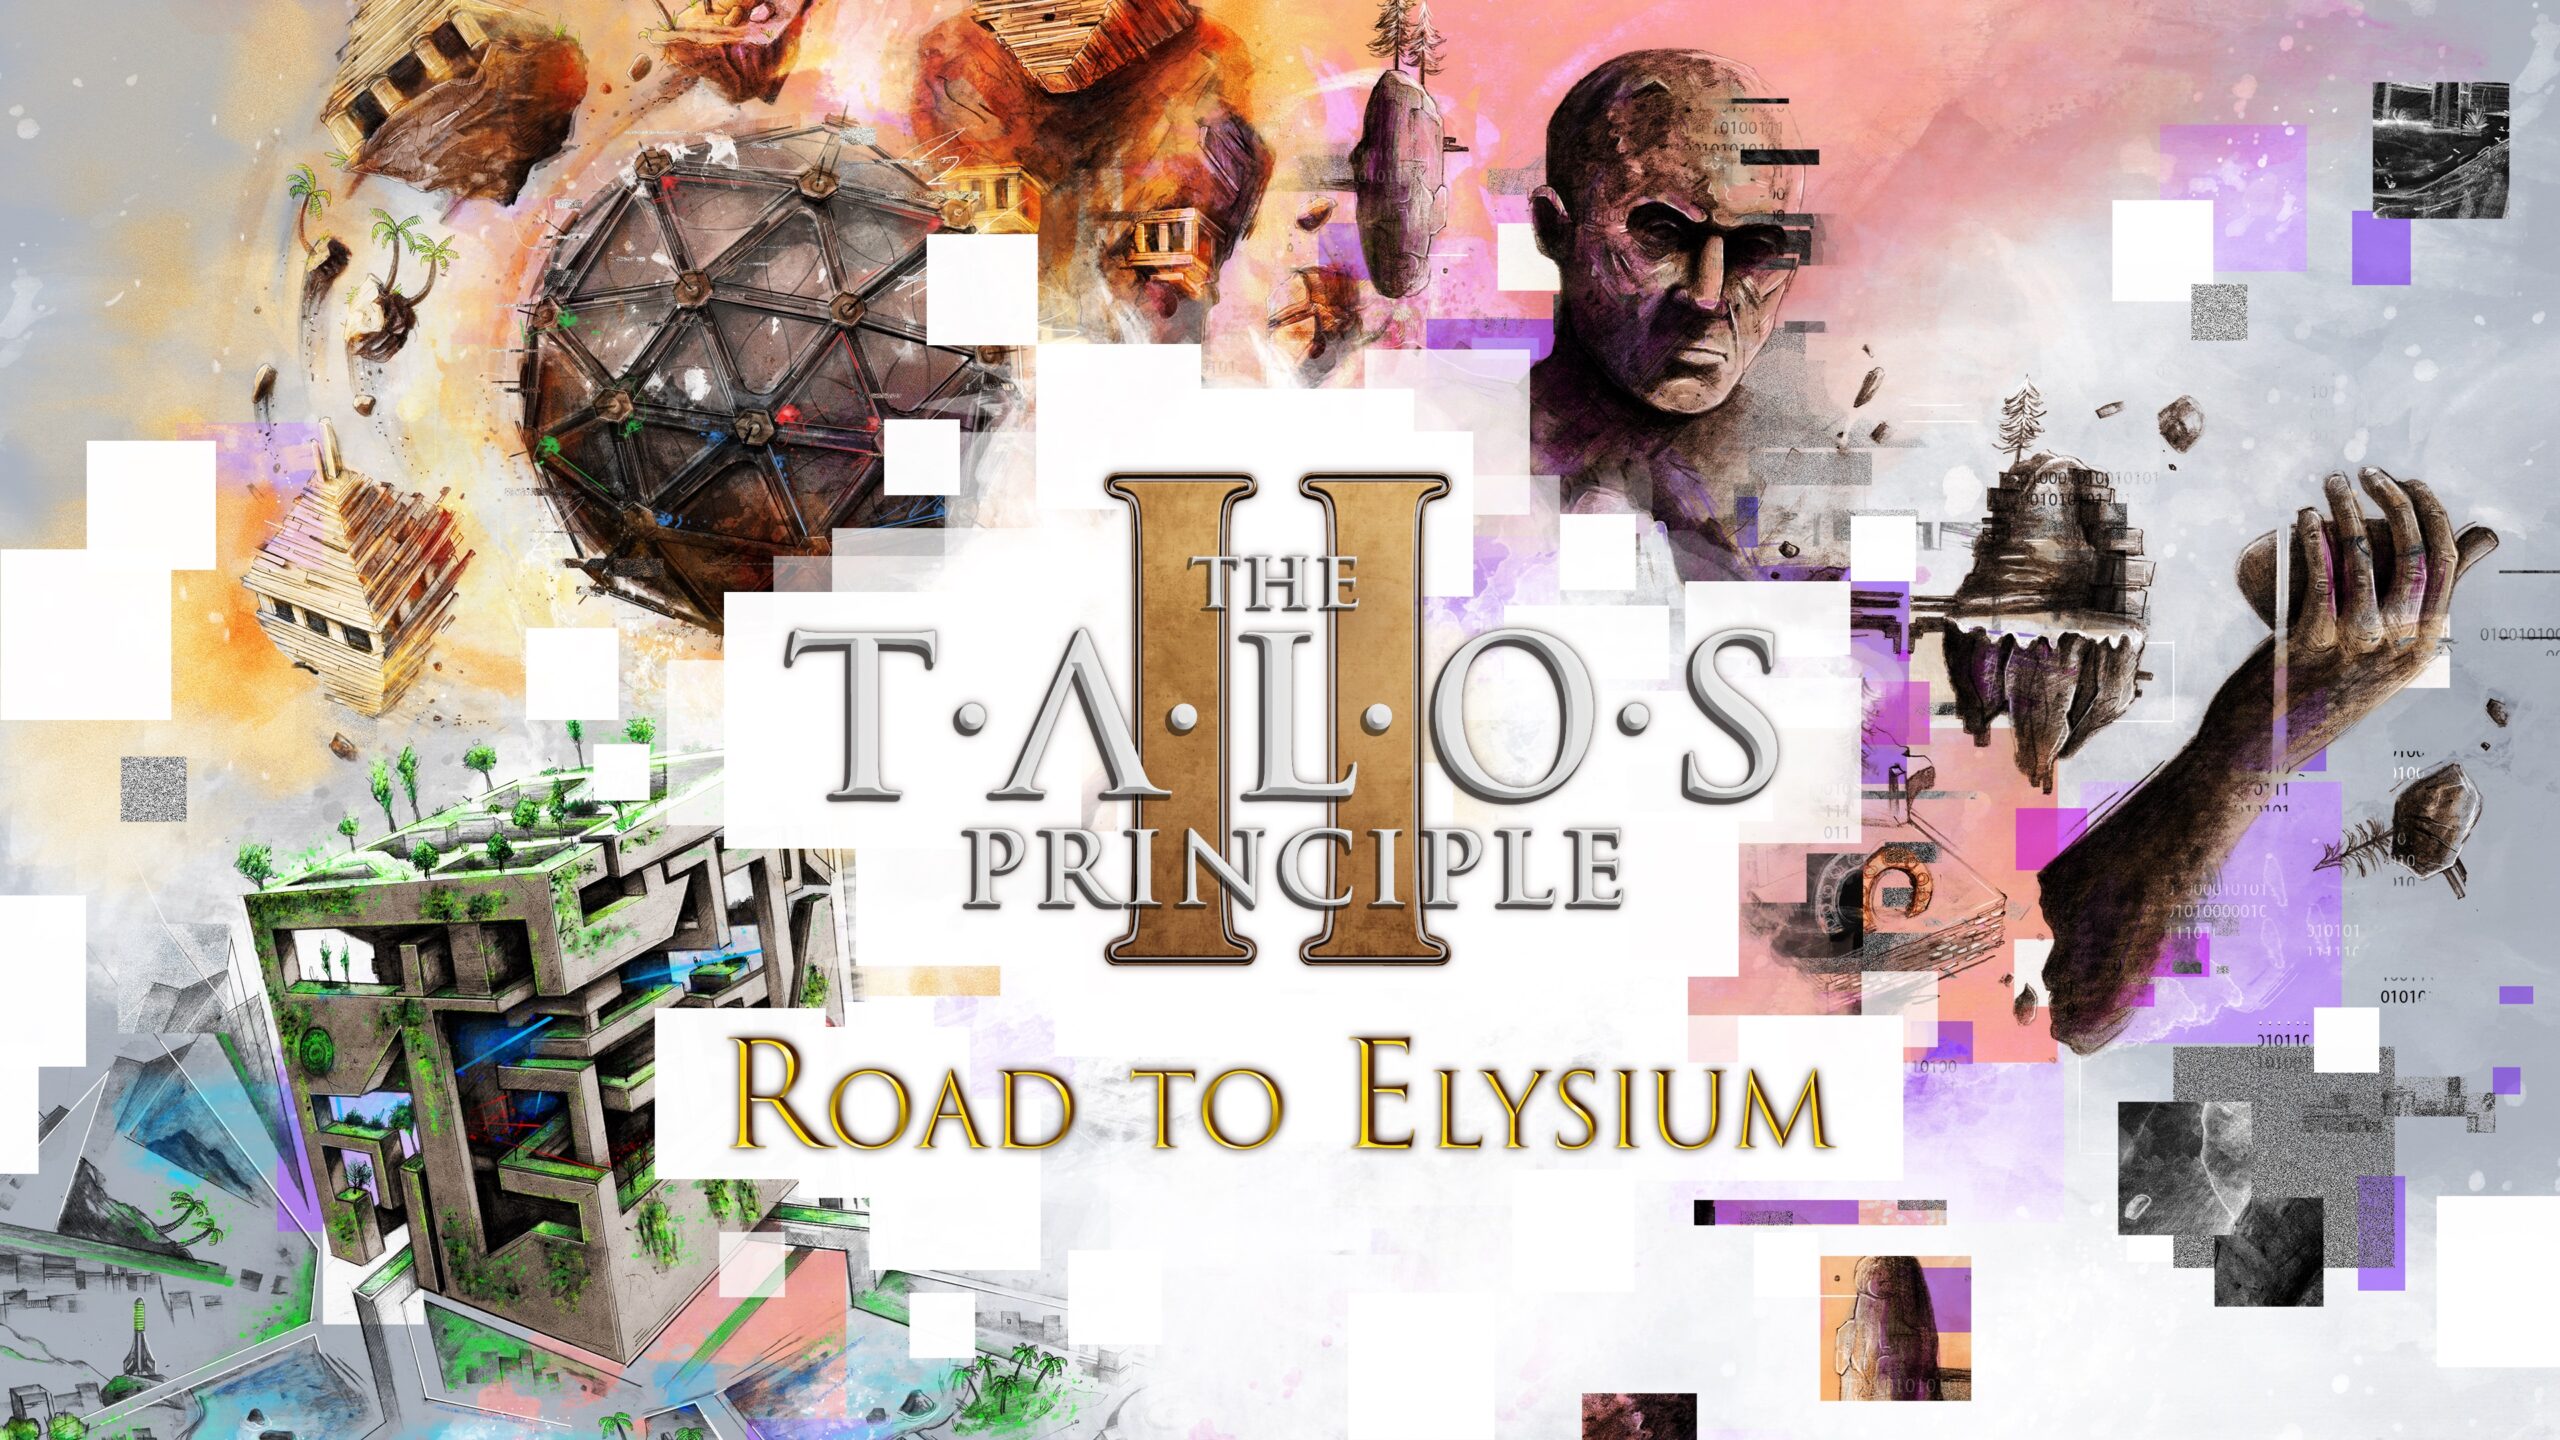 talos principle 2 road to elysium featured image